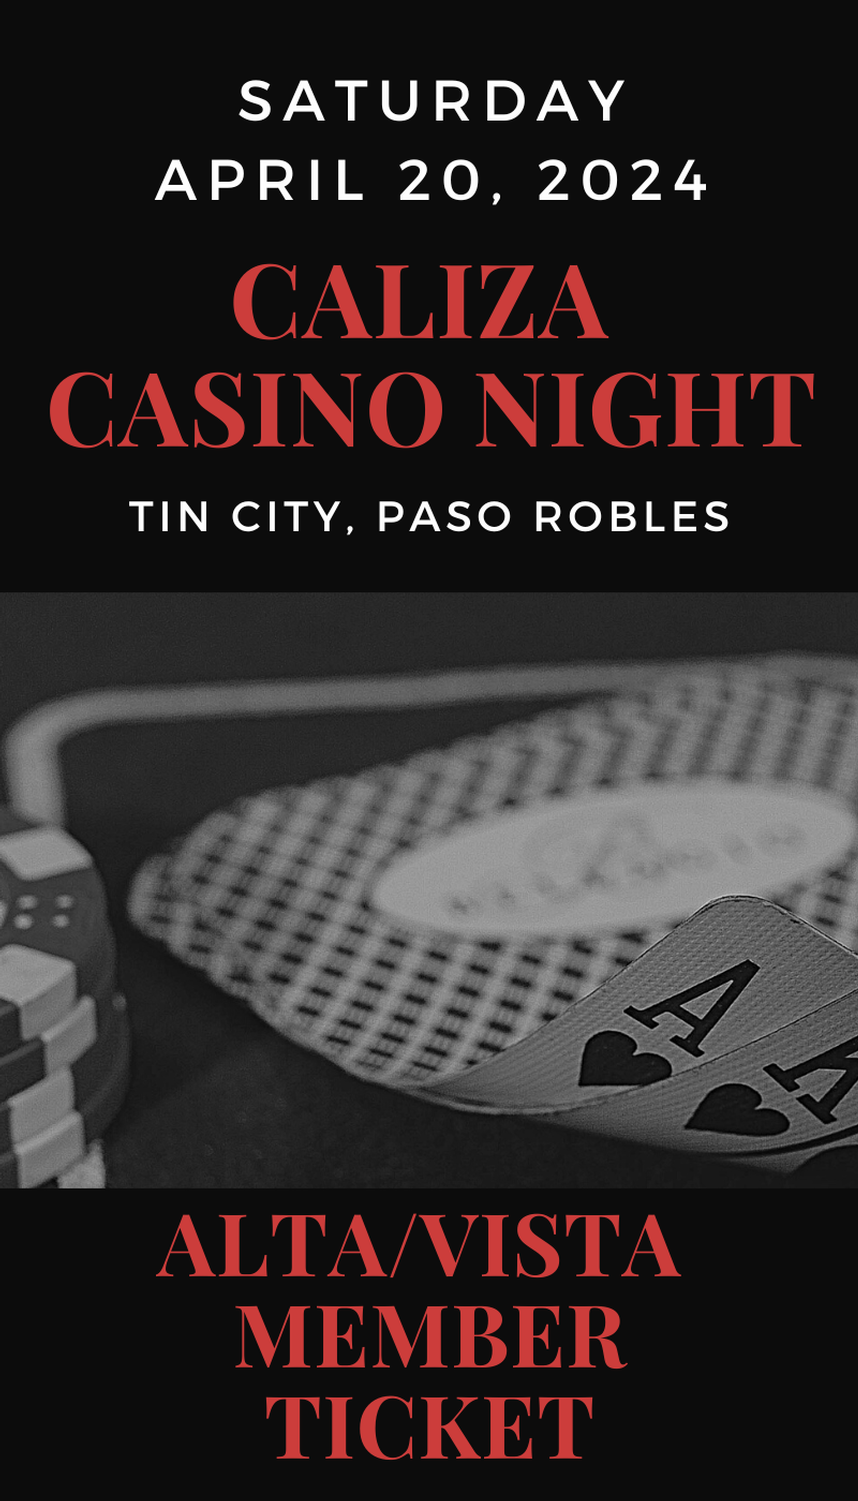 Casino Night - ALTA/VISTA